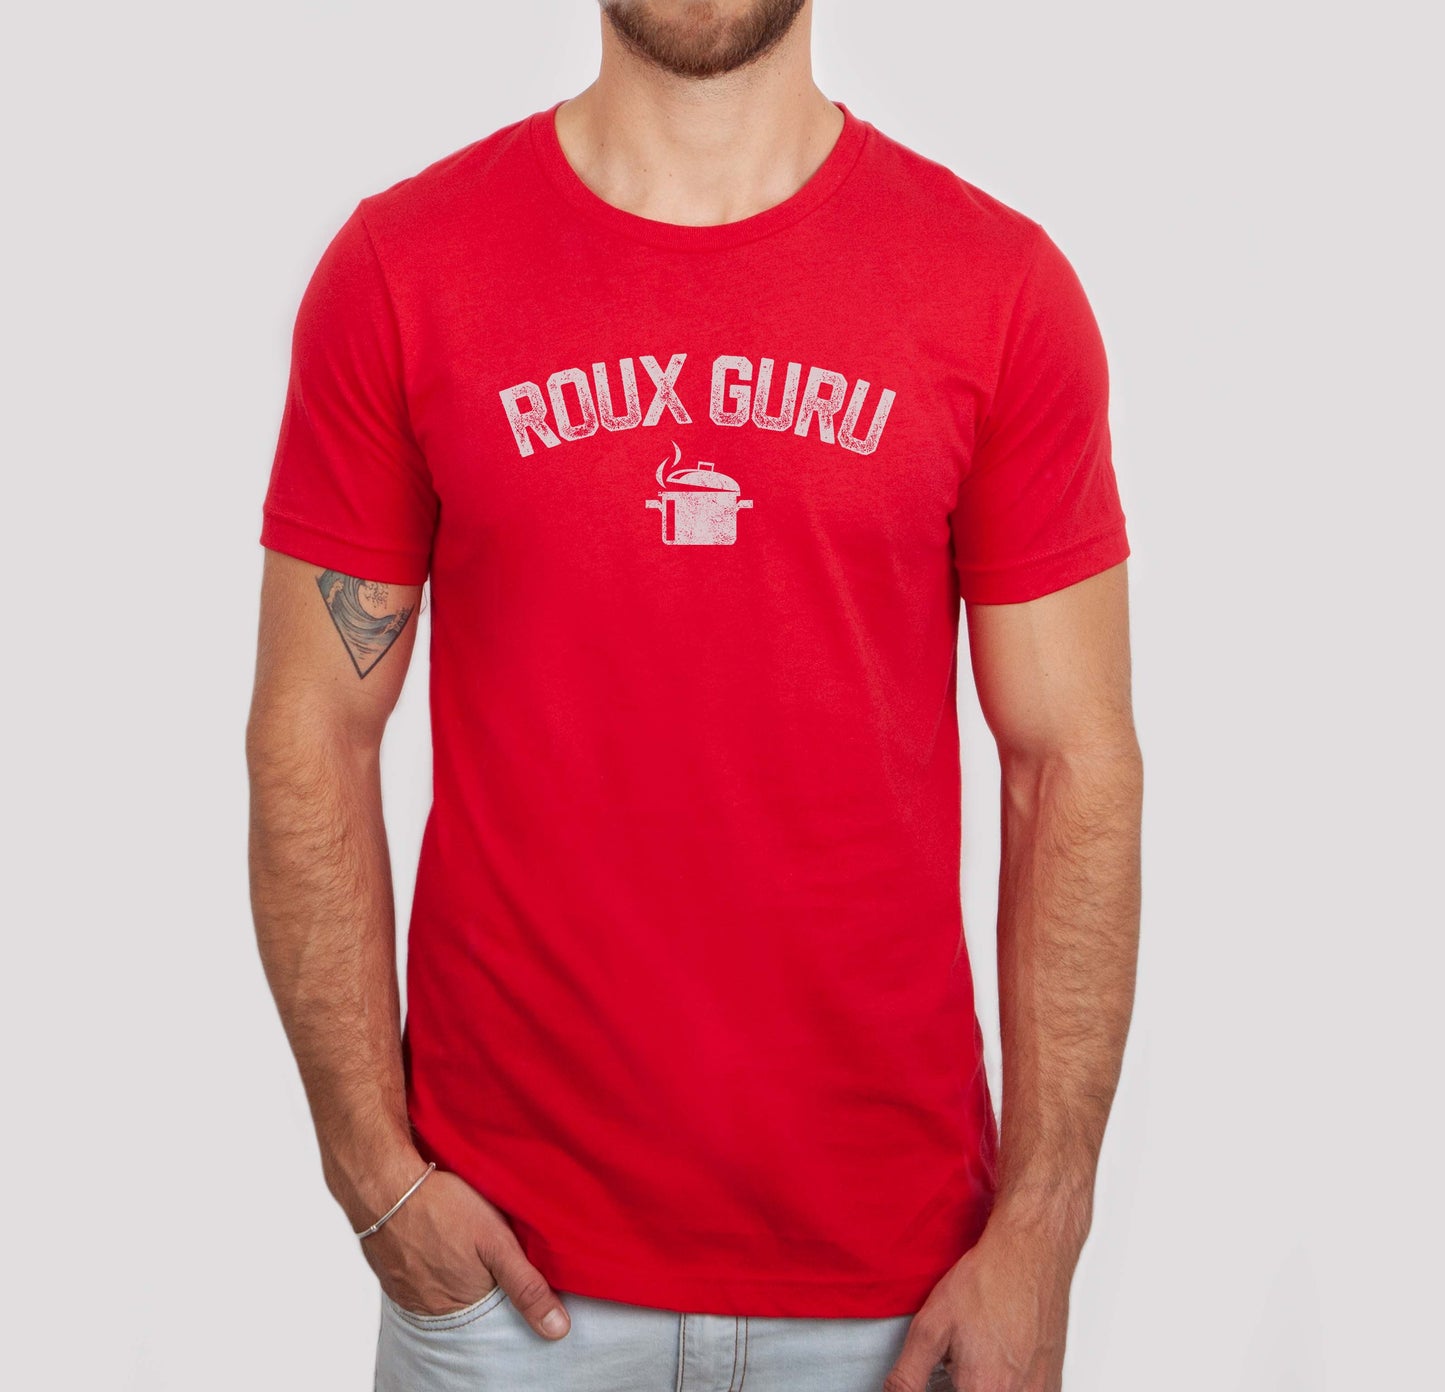 Roux Guru Louisiana Cajun Shirt, New Orleans, Trendy Shirt, Gift